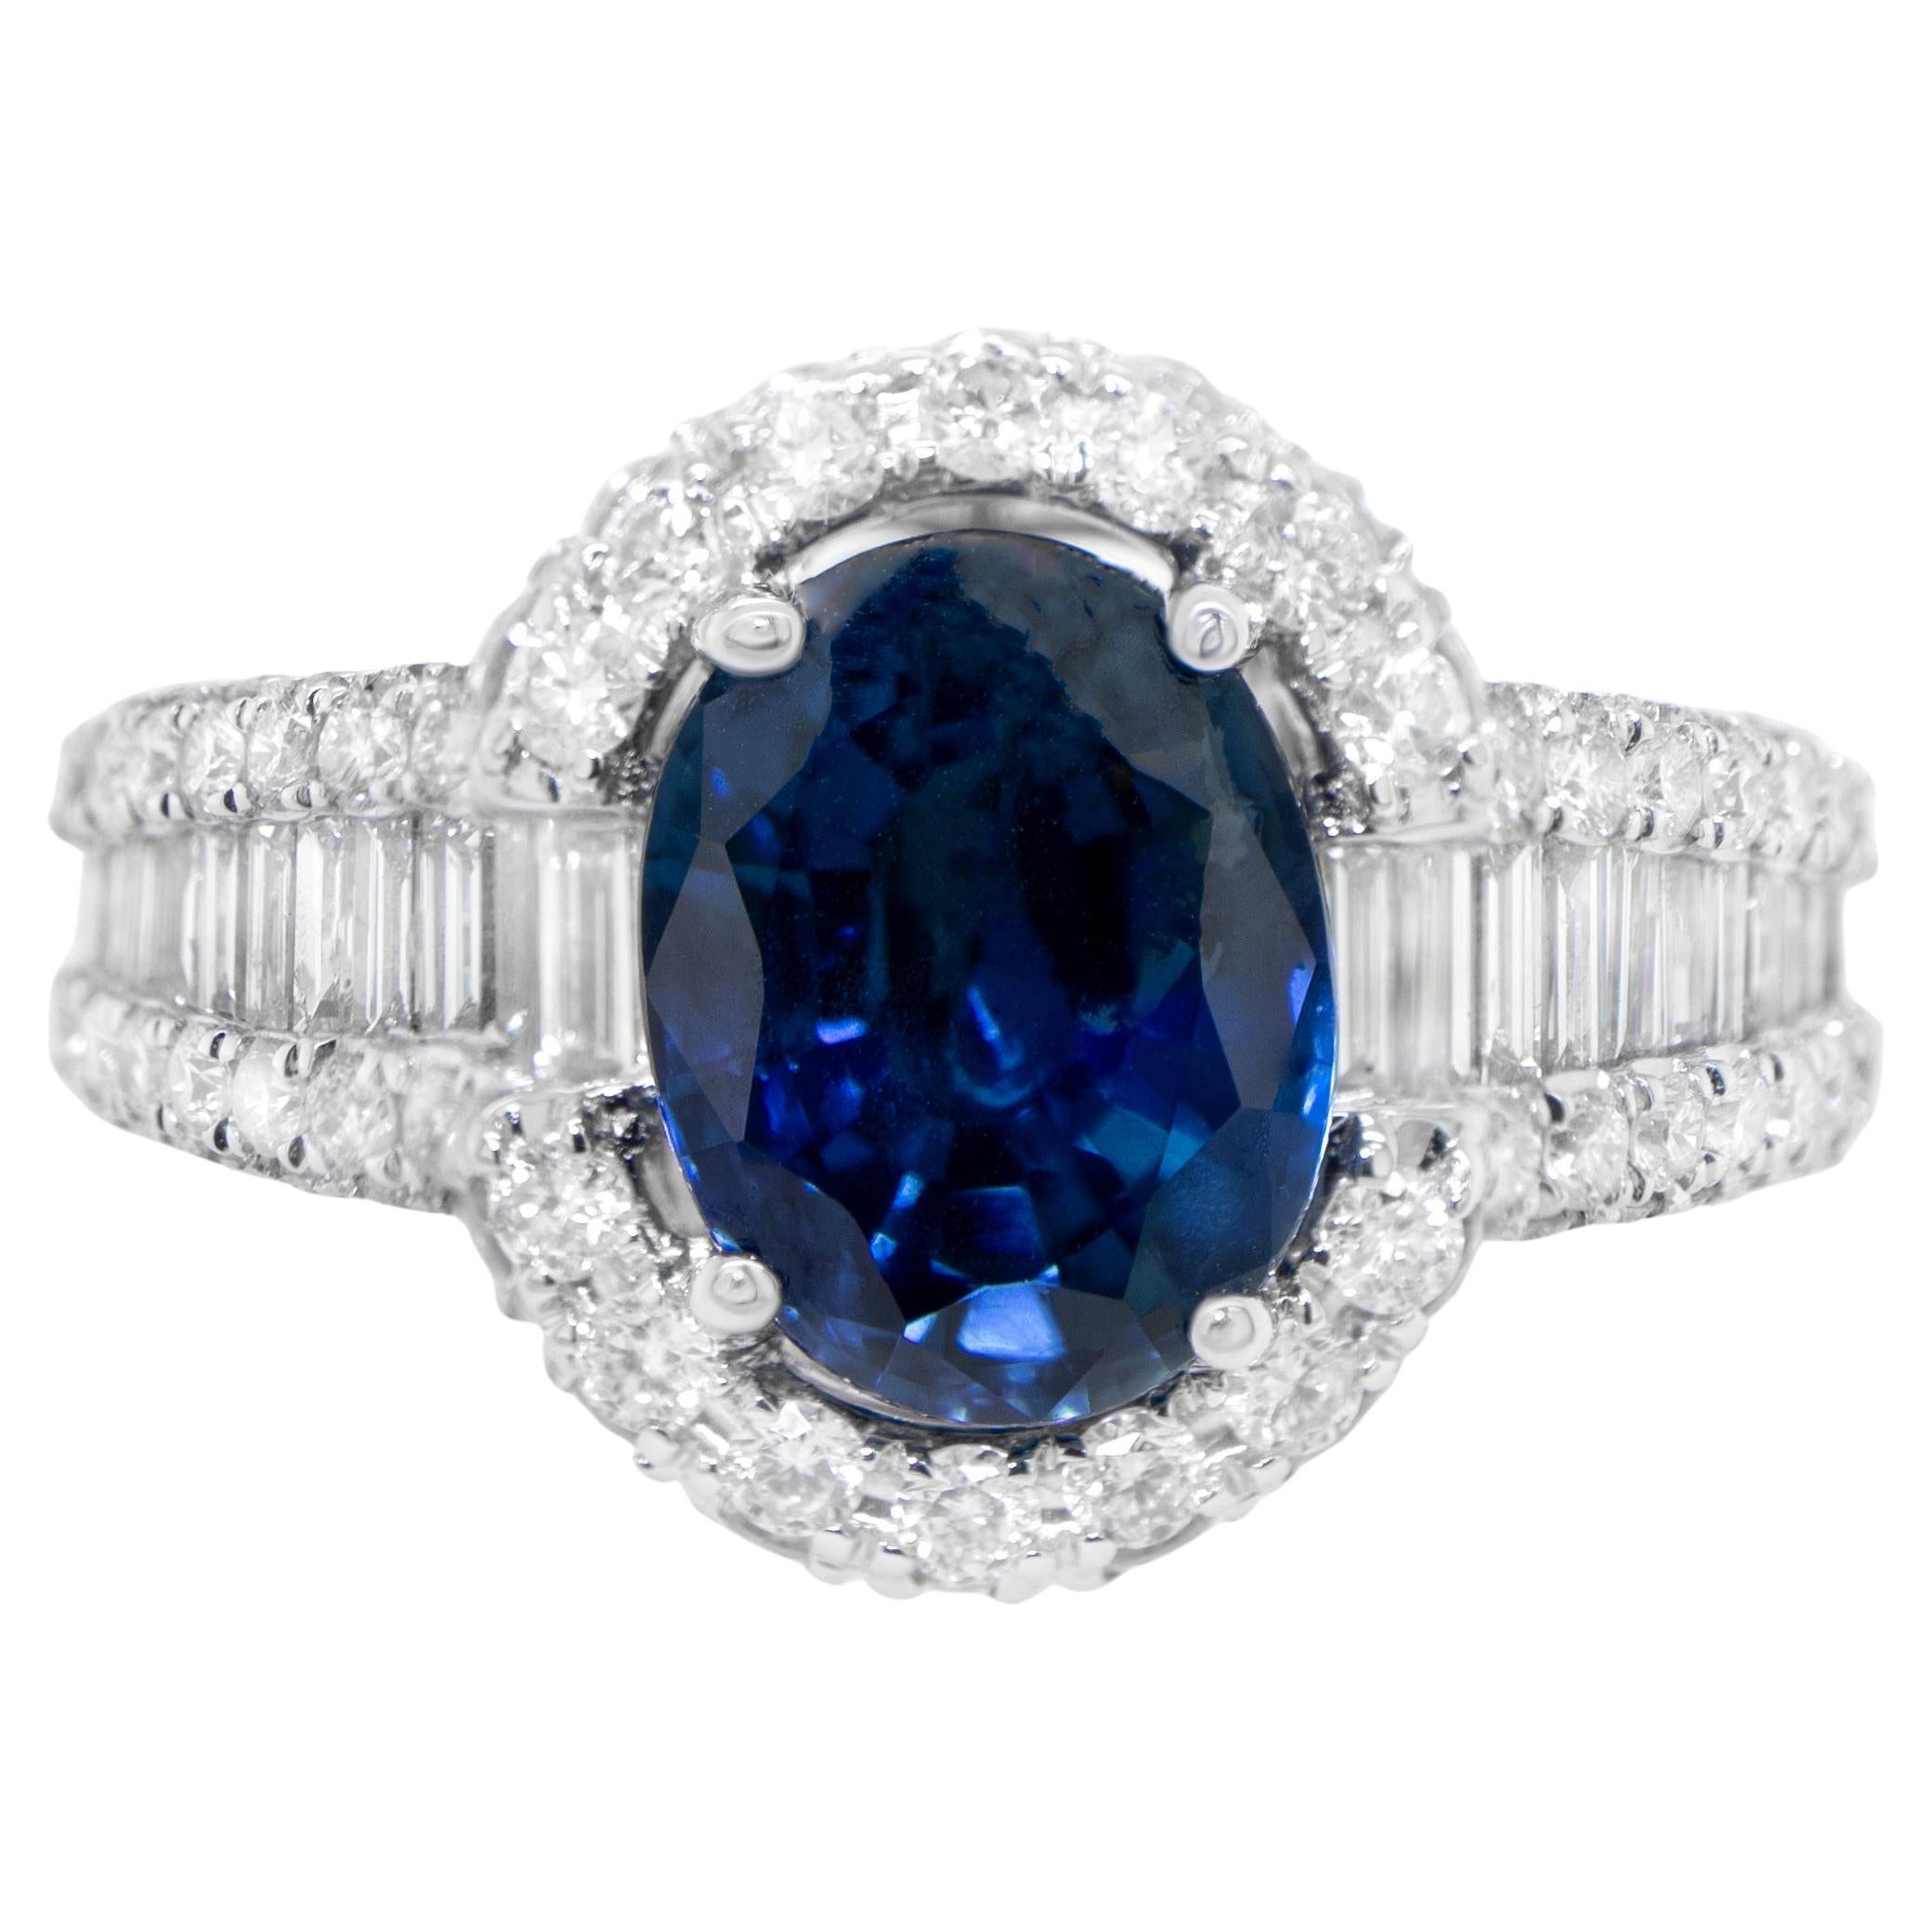 Blue Sapphire Ring Diamond Setting 4.67 Carats 18K Gold